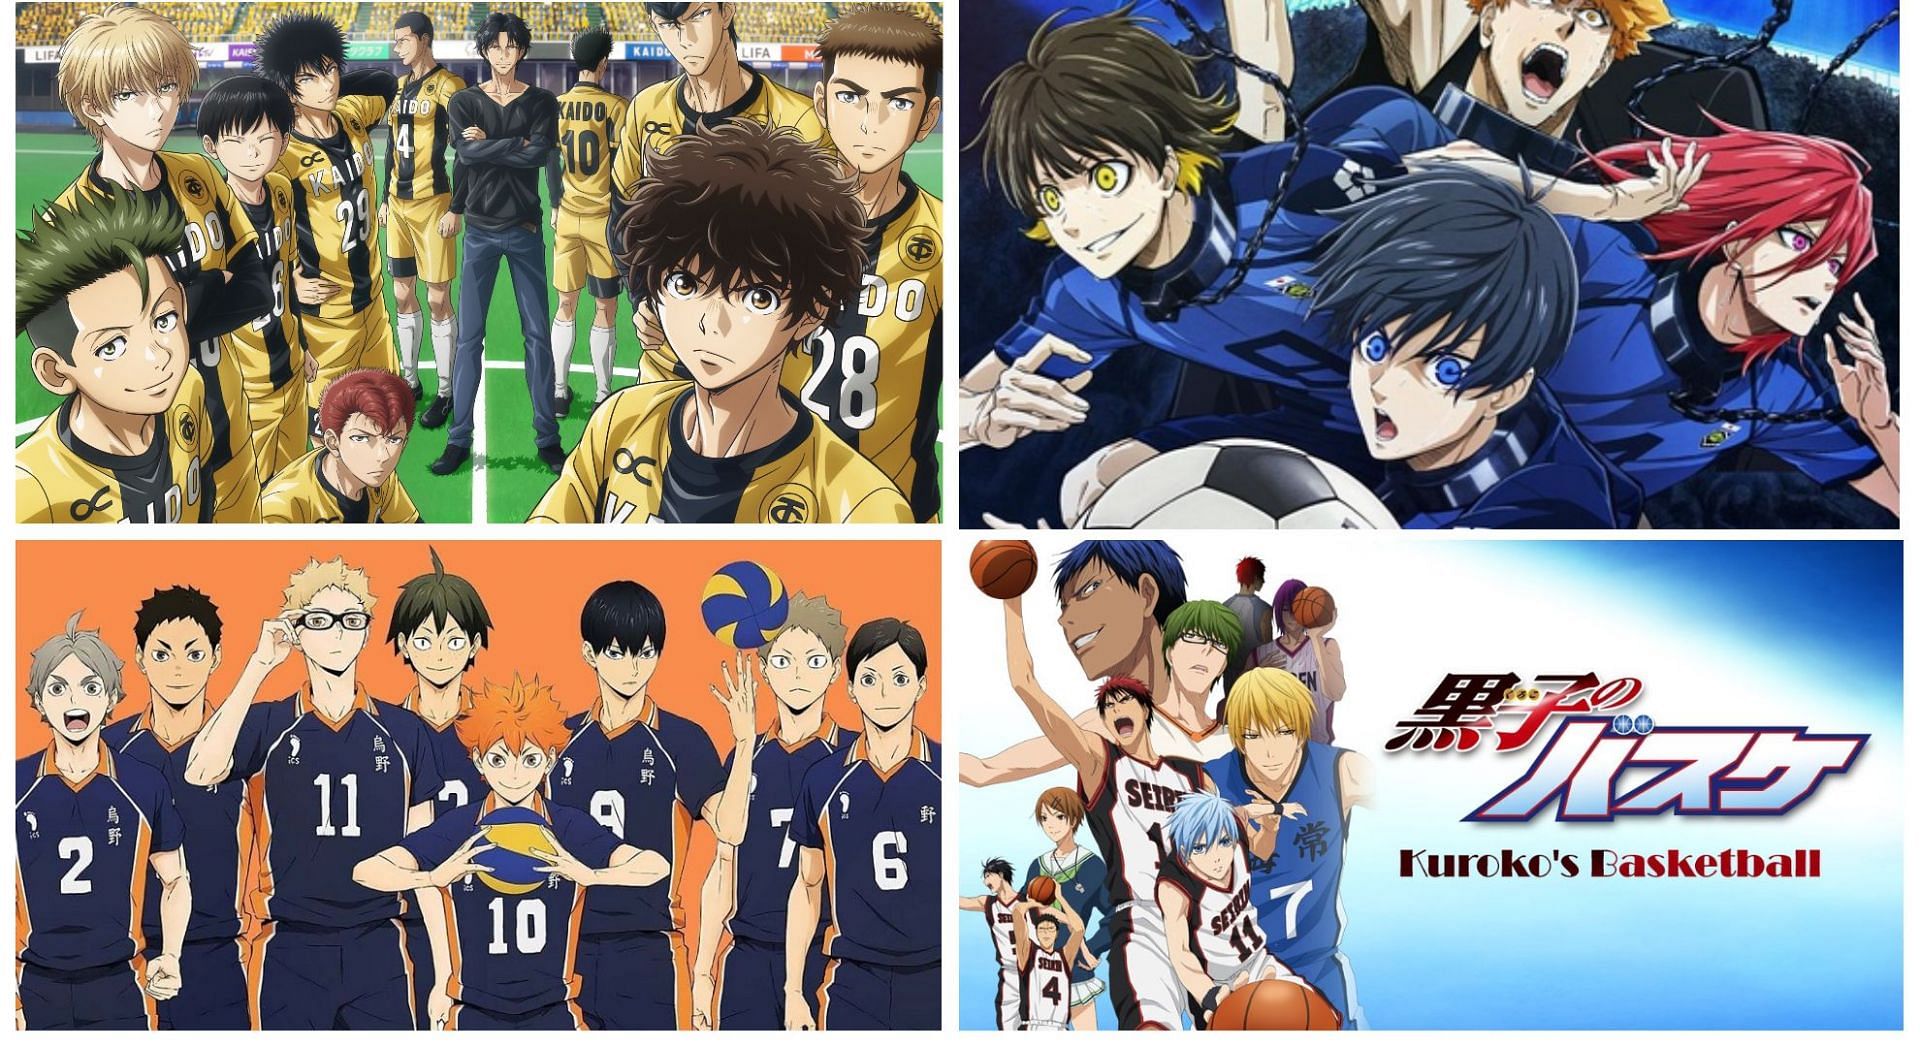 Anime Edition] $28 to choose seven players and build a lineup you like! : r/ haikyuu